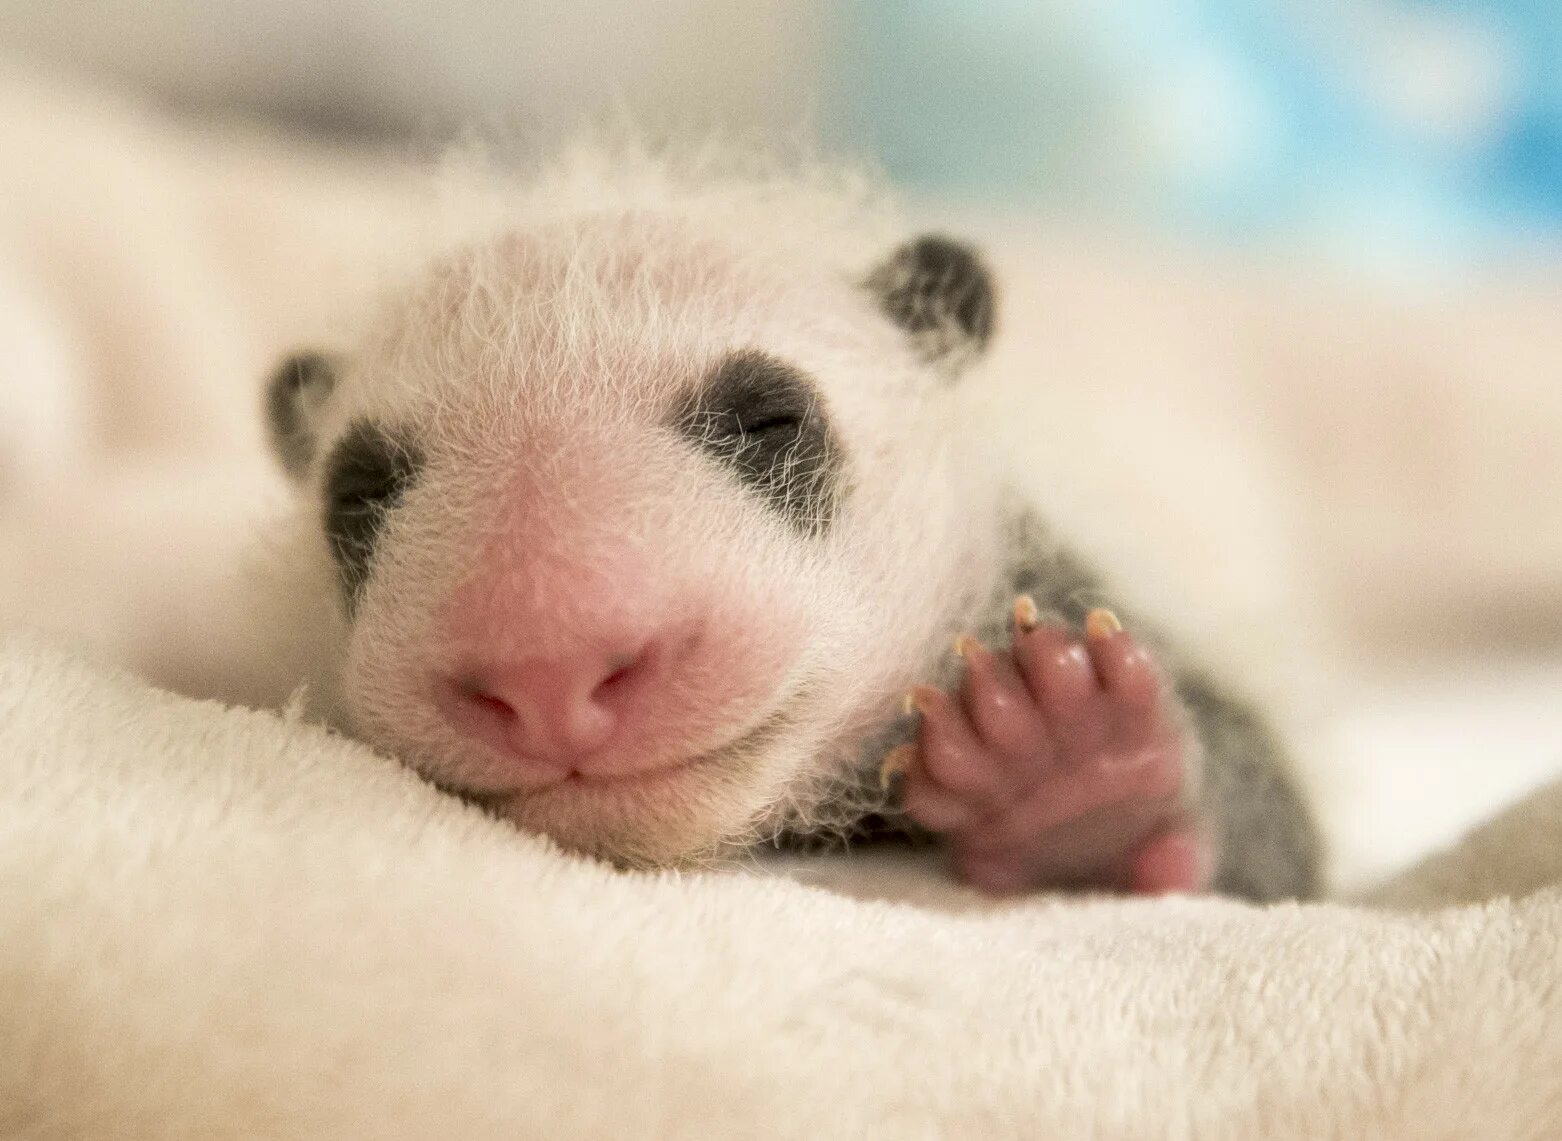 Родившийся детеныш панды. Панда с детёнышем. Новорожденный Панда. Новорожденные панды. Новорожденнныйлетеныш панды.